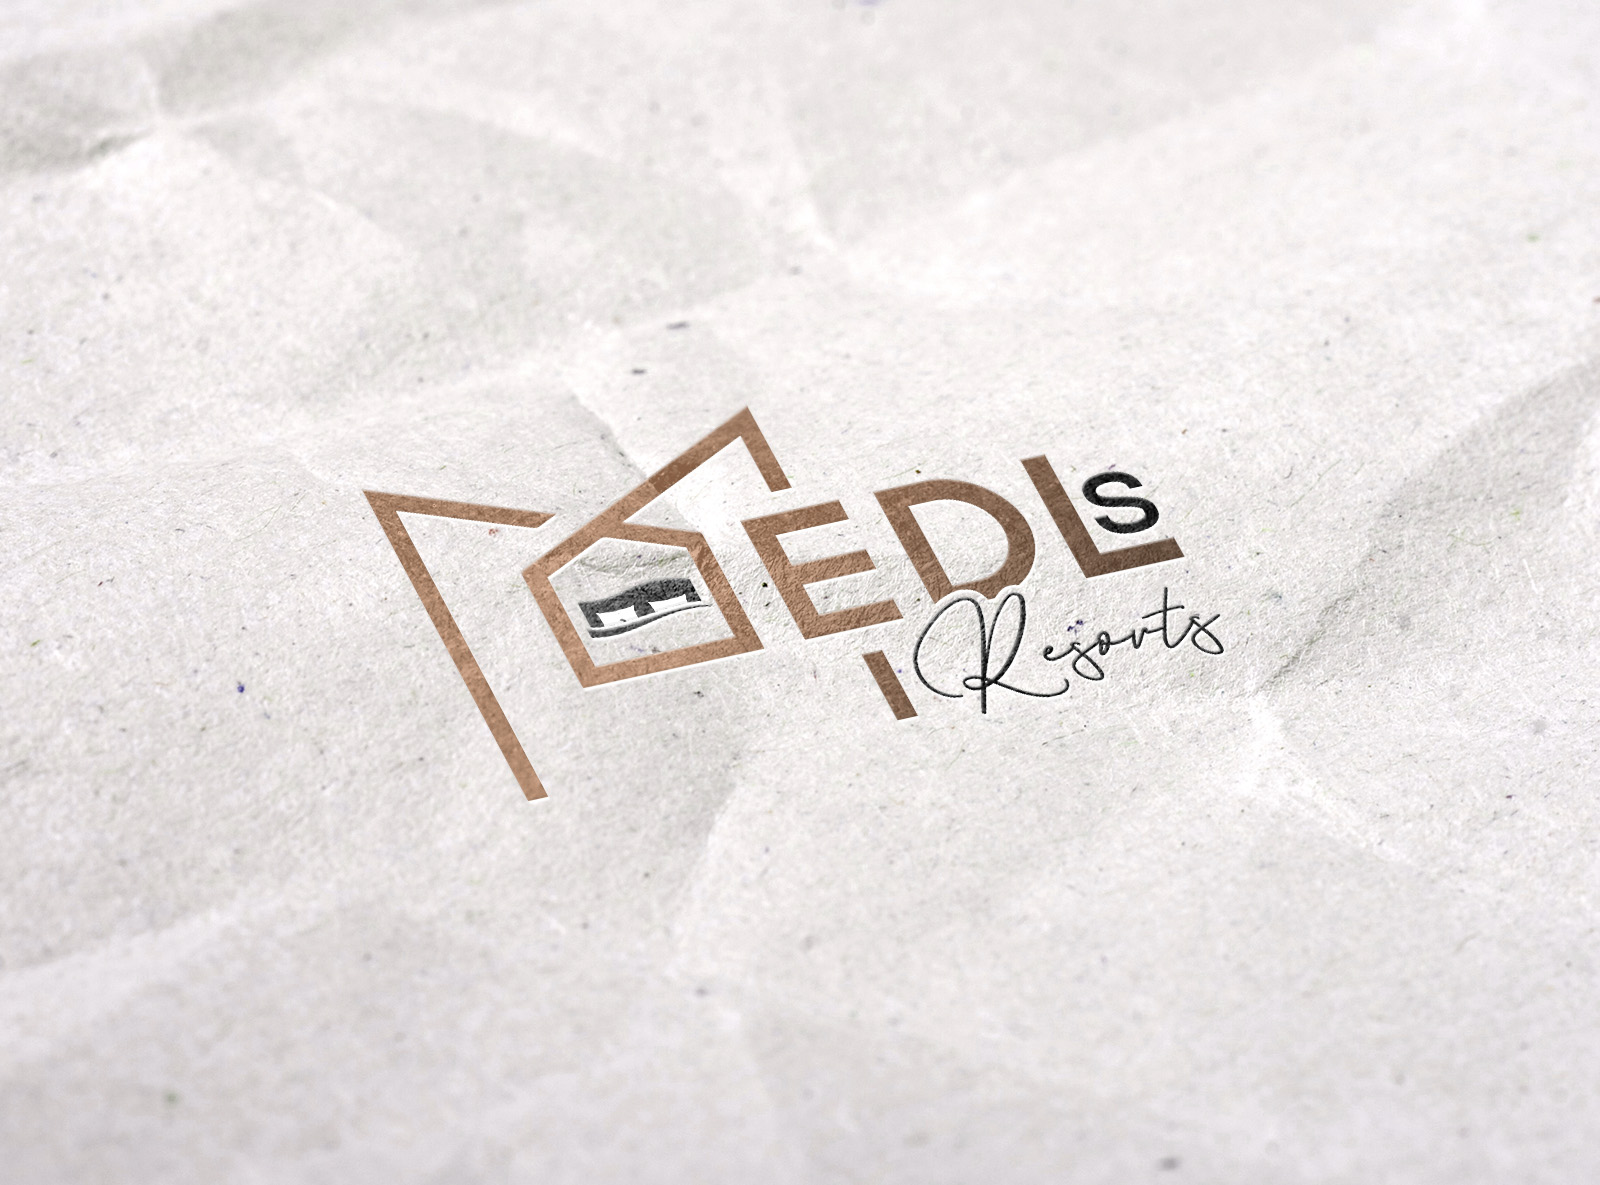 Logodesign Medl's Resort